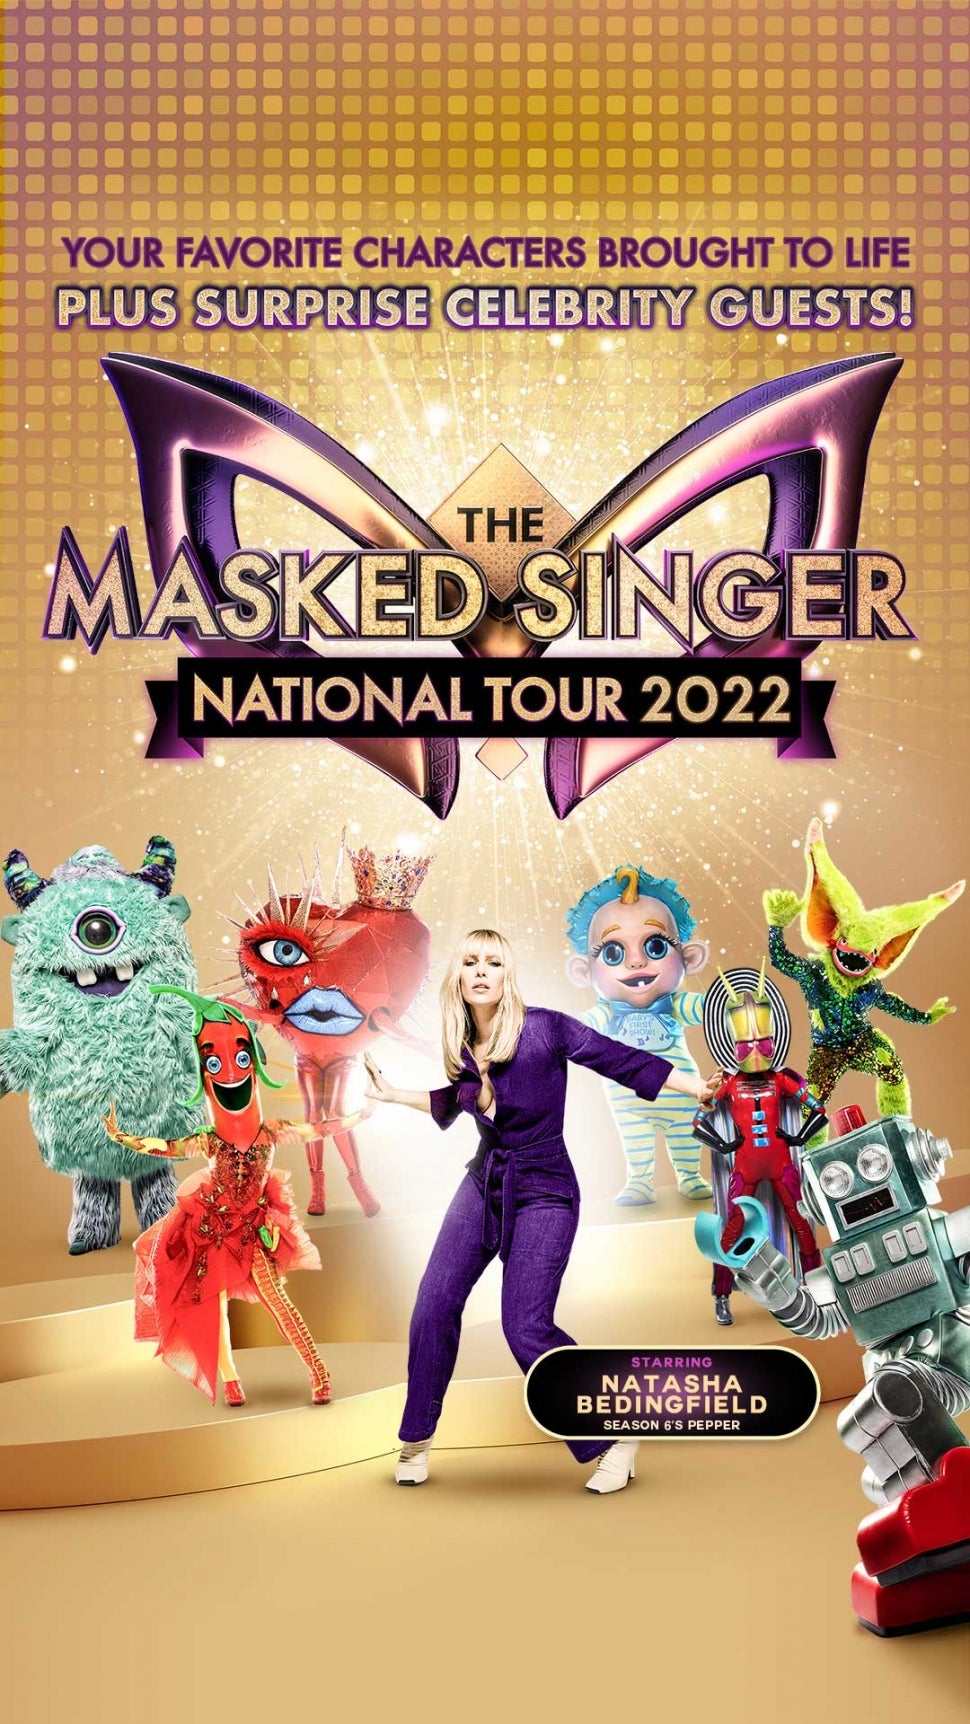 The Masked Singer Tour